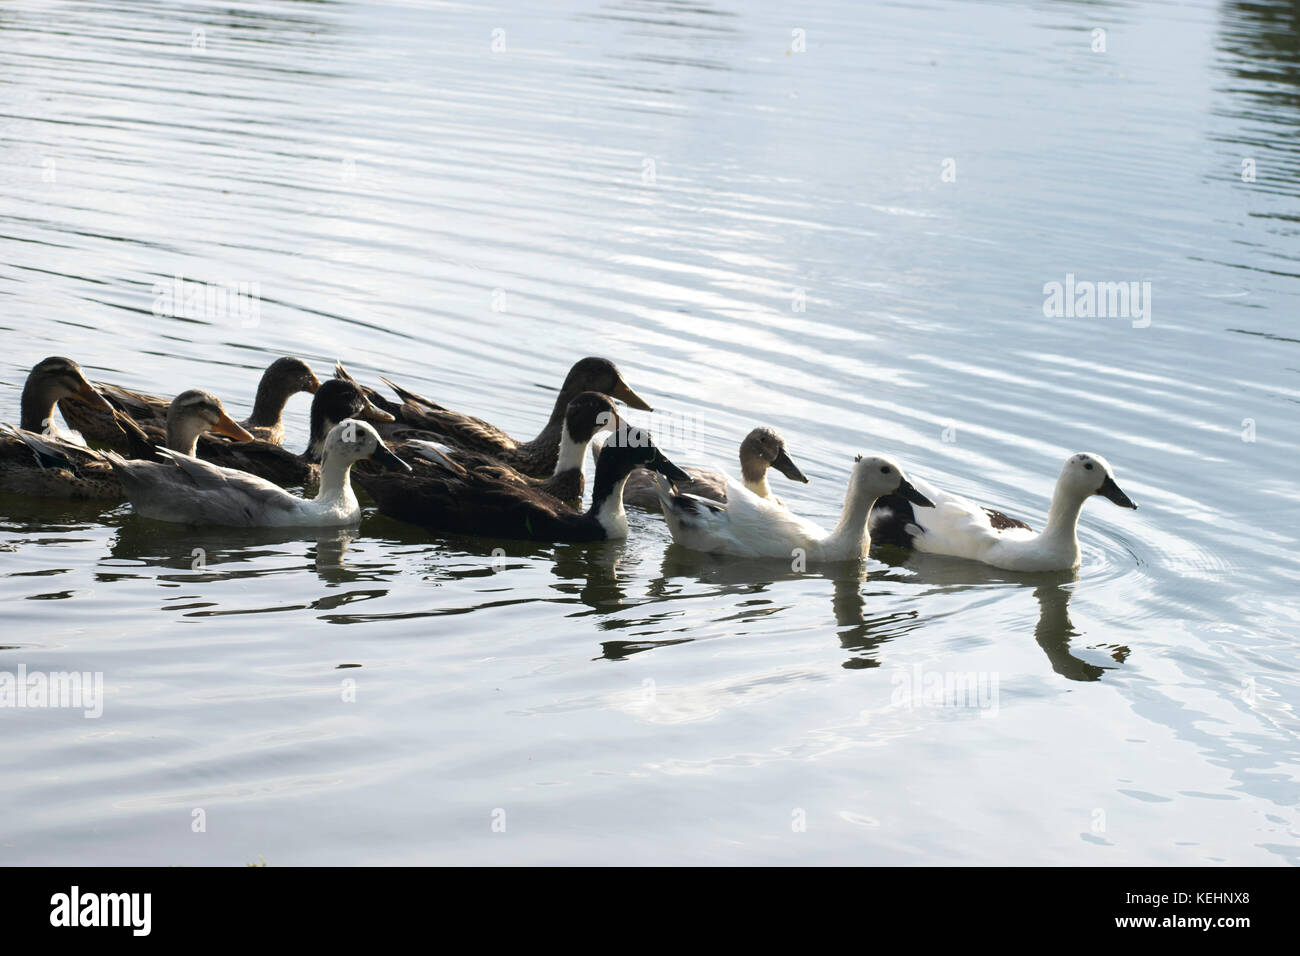 group of ducks swimming in water lake pond followers reflection bright bird animal behavior Stock Photo